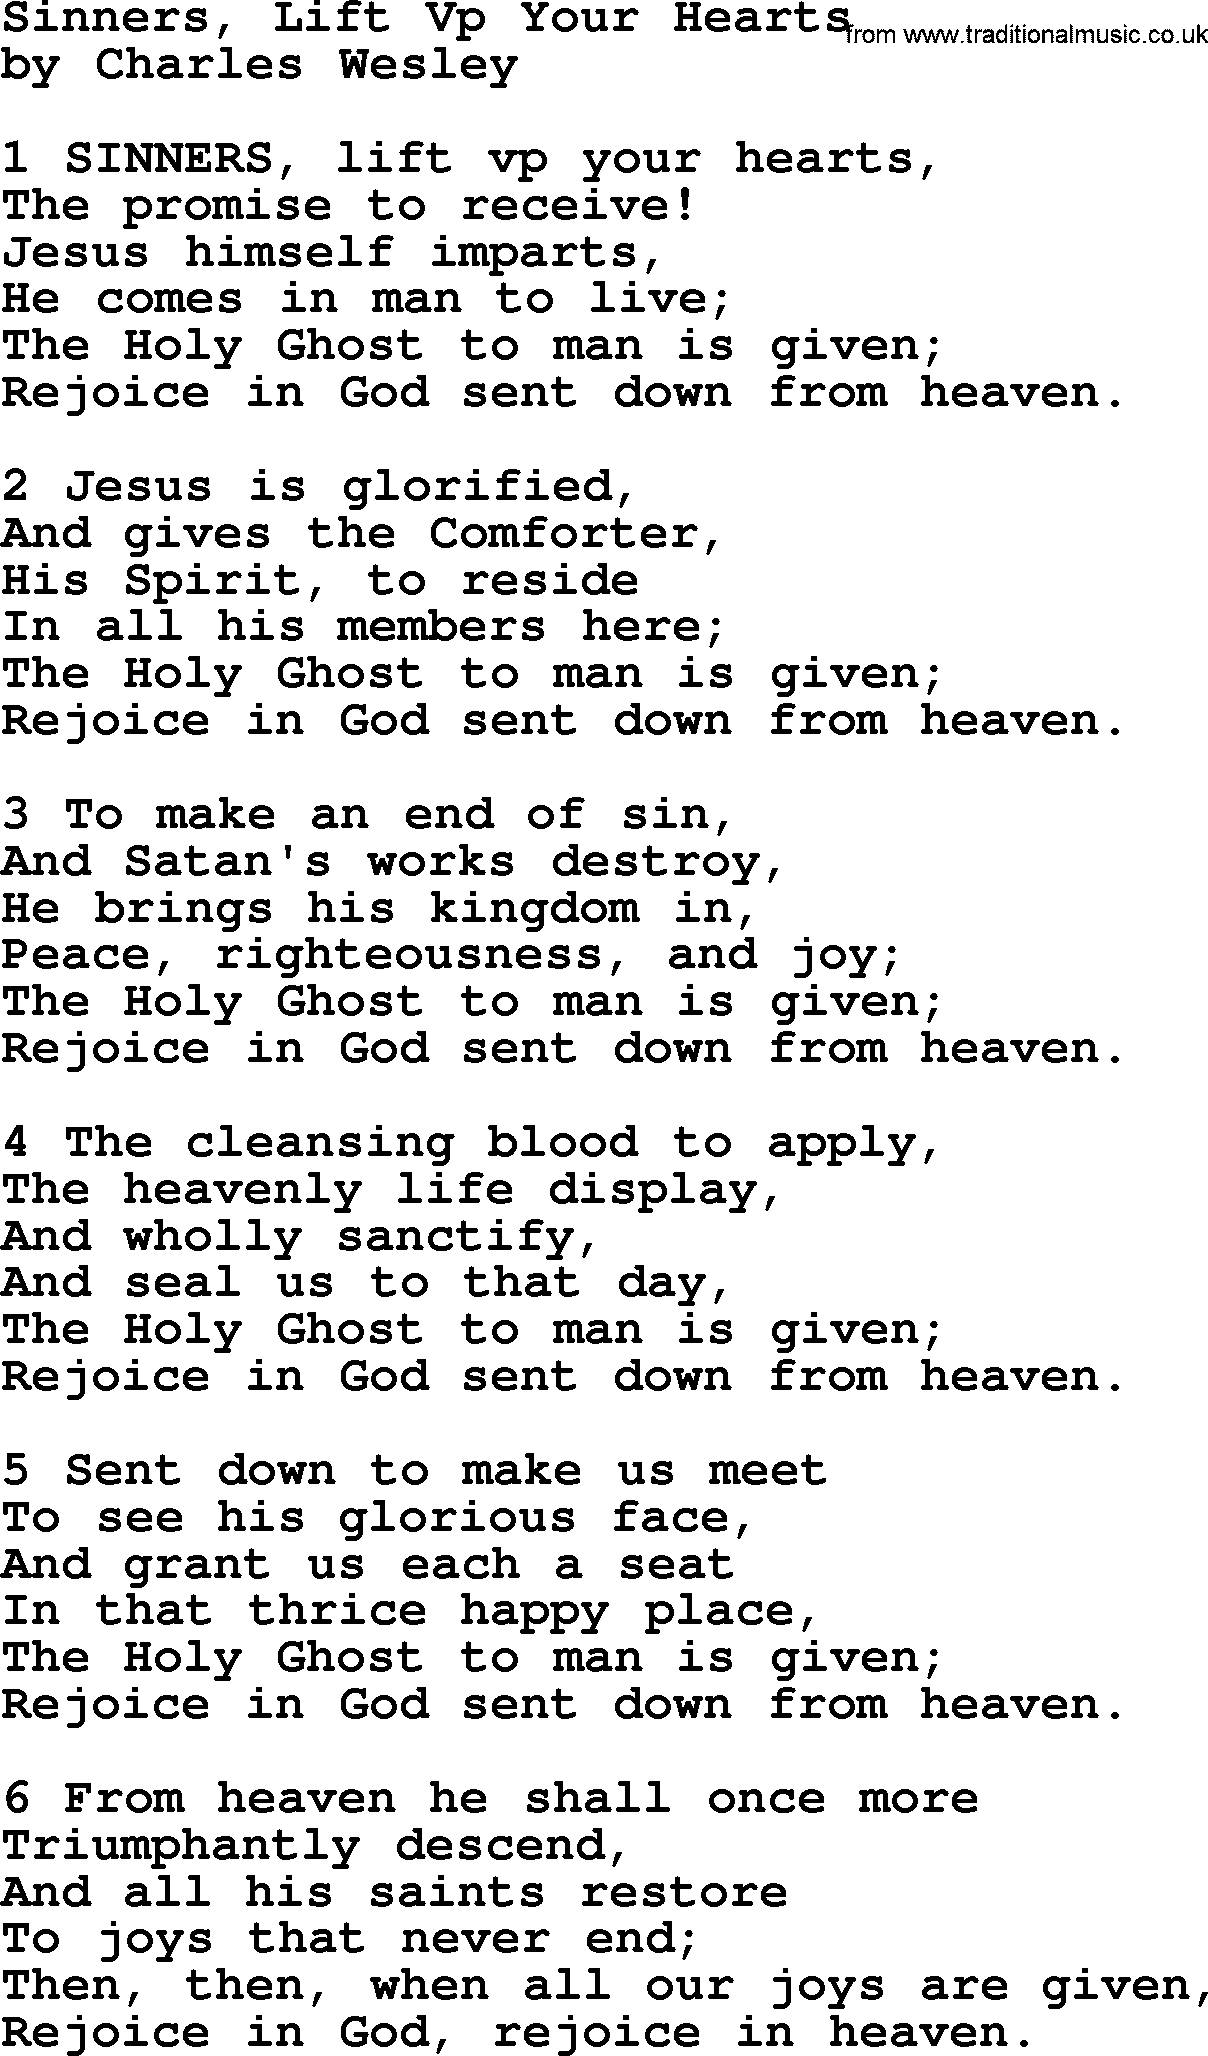 Charles Wesley hymn: Sinners, Lift Vp Your Hearts, lyrics